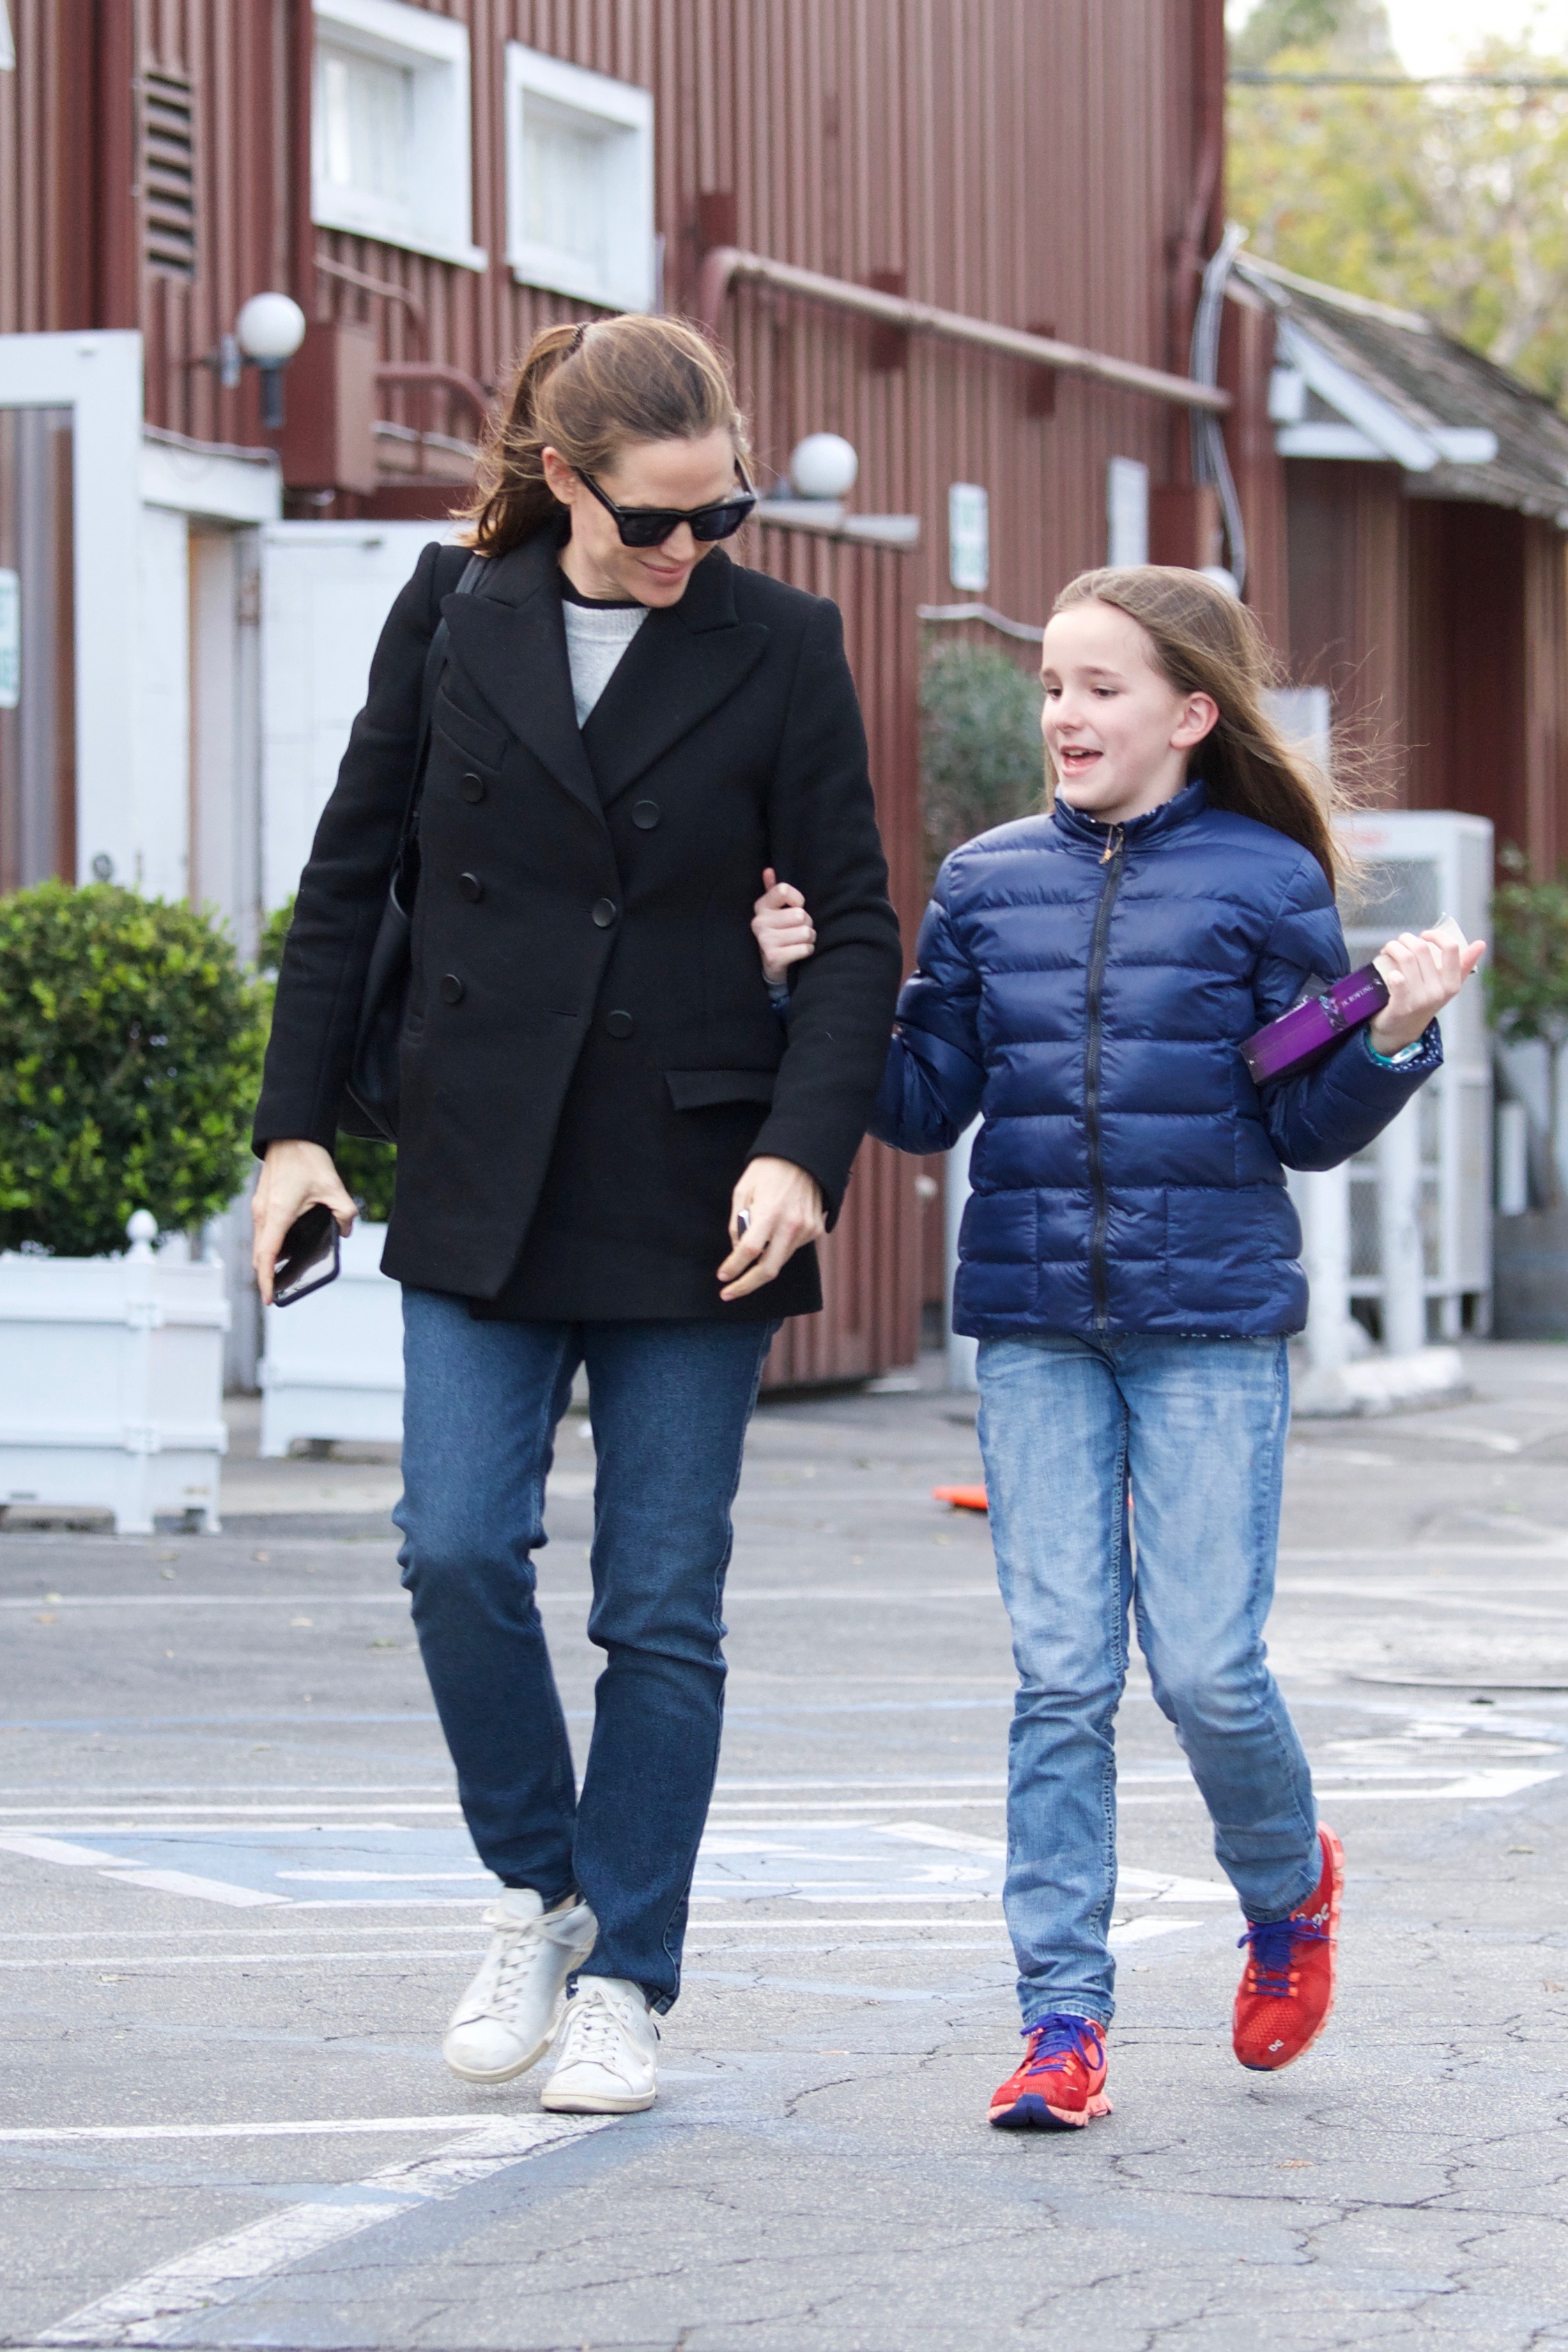 Jennifer Garner and Daughter Seraphina Bond in New Photos